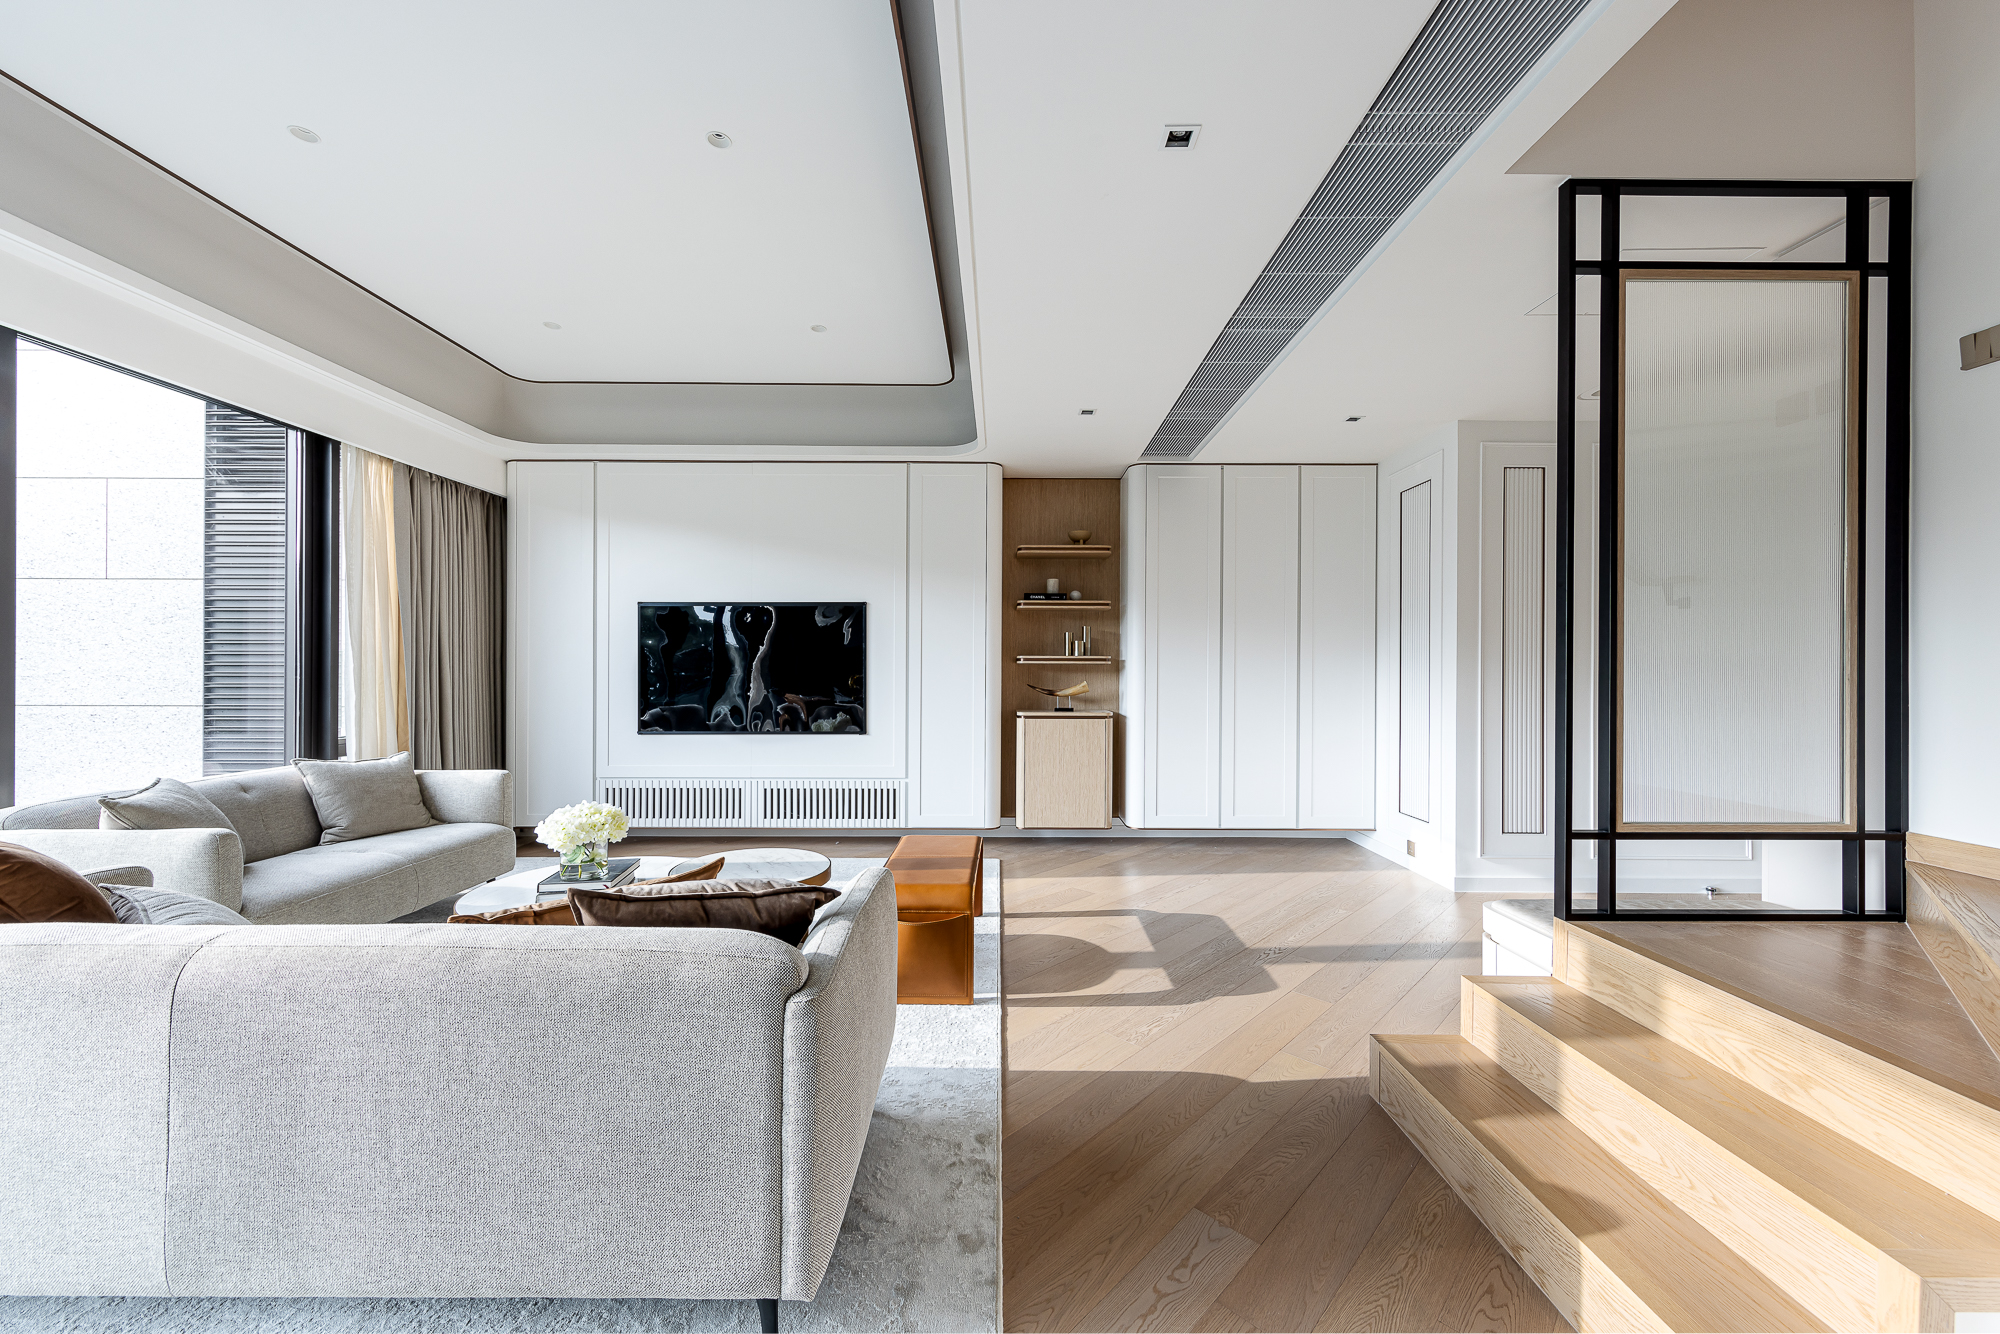 Matthew Li - Grande Interior Design - St. Moritz